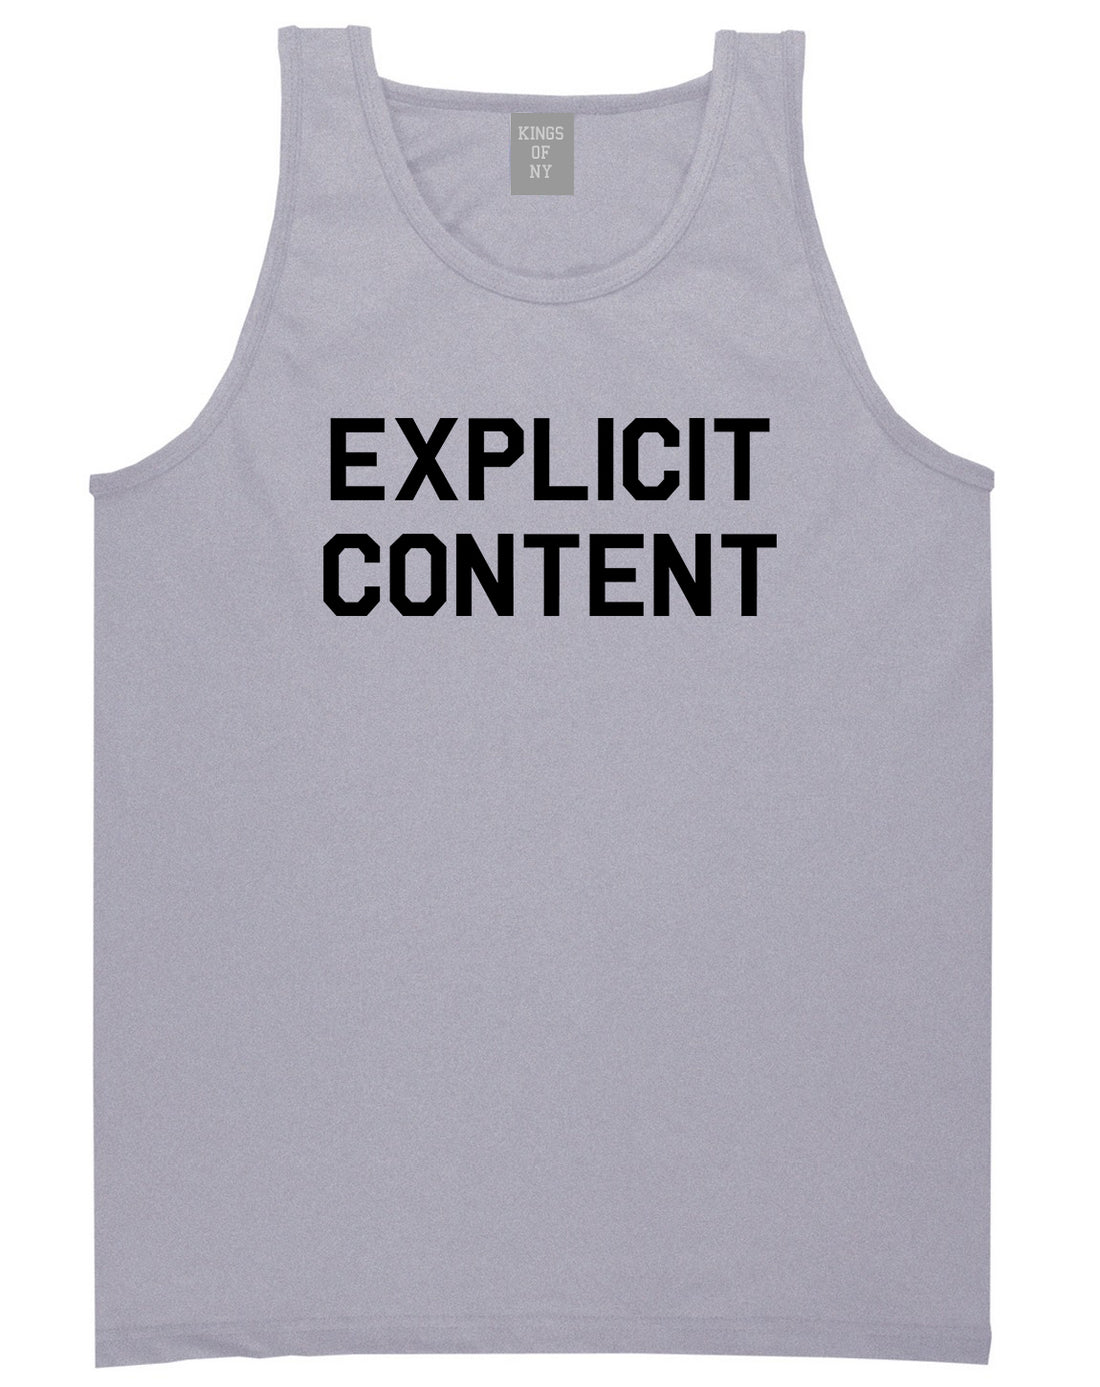 Explicit_Content Mens Grey Tank Top Shirt by Kings Of NY